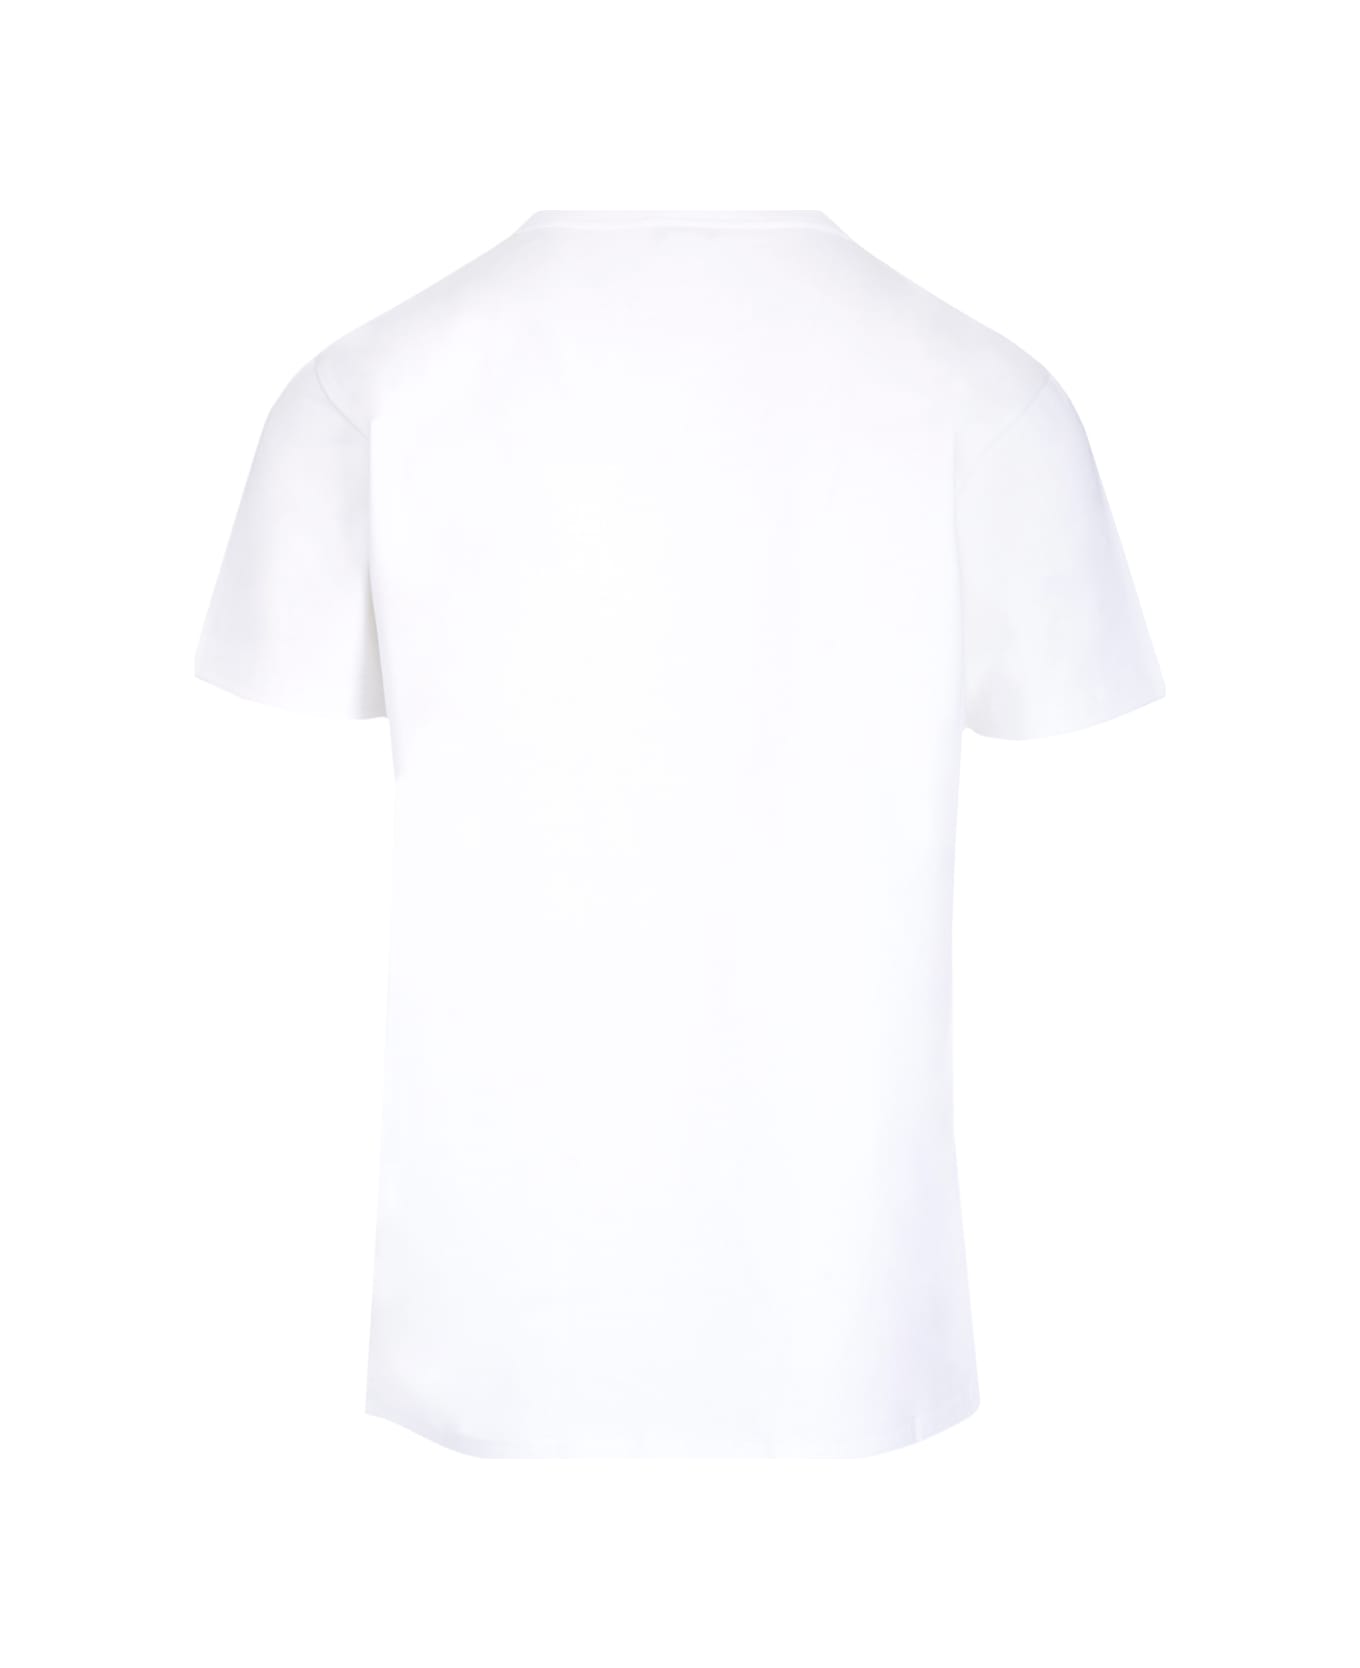 Palm Angels Logo-print Crew-neck T-shirt - WHITE BLANC シャツ